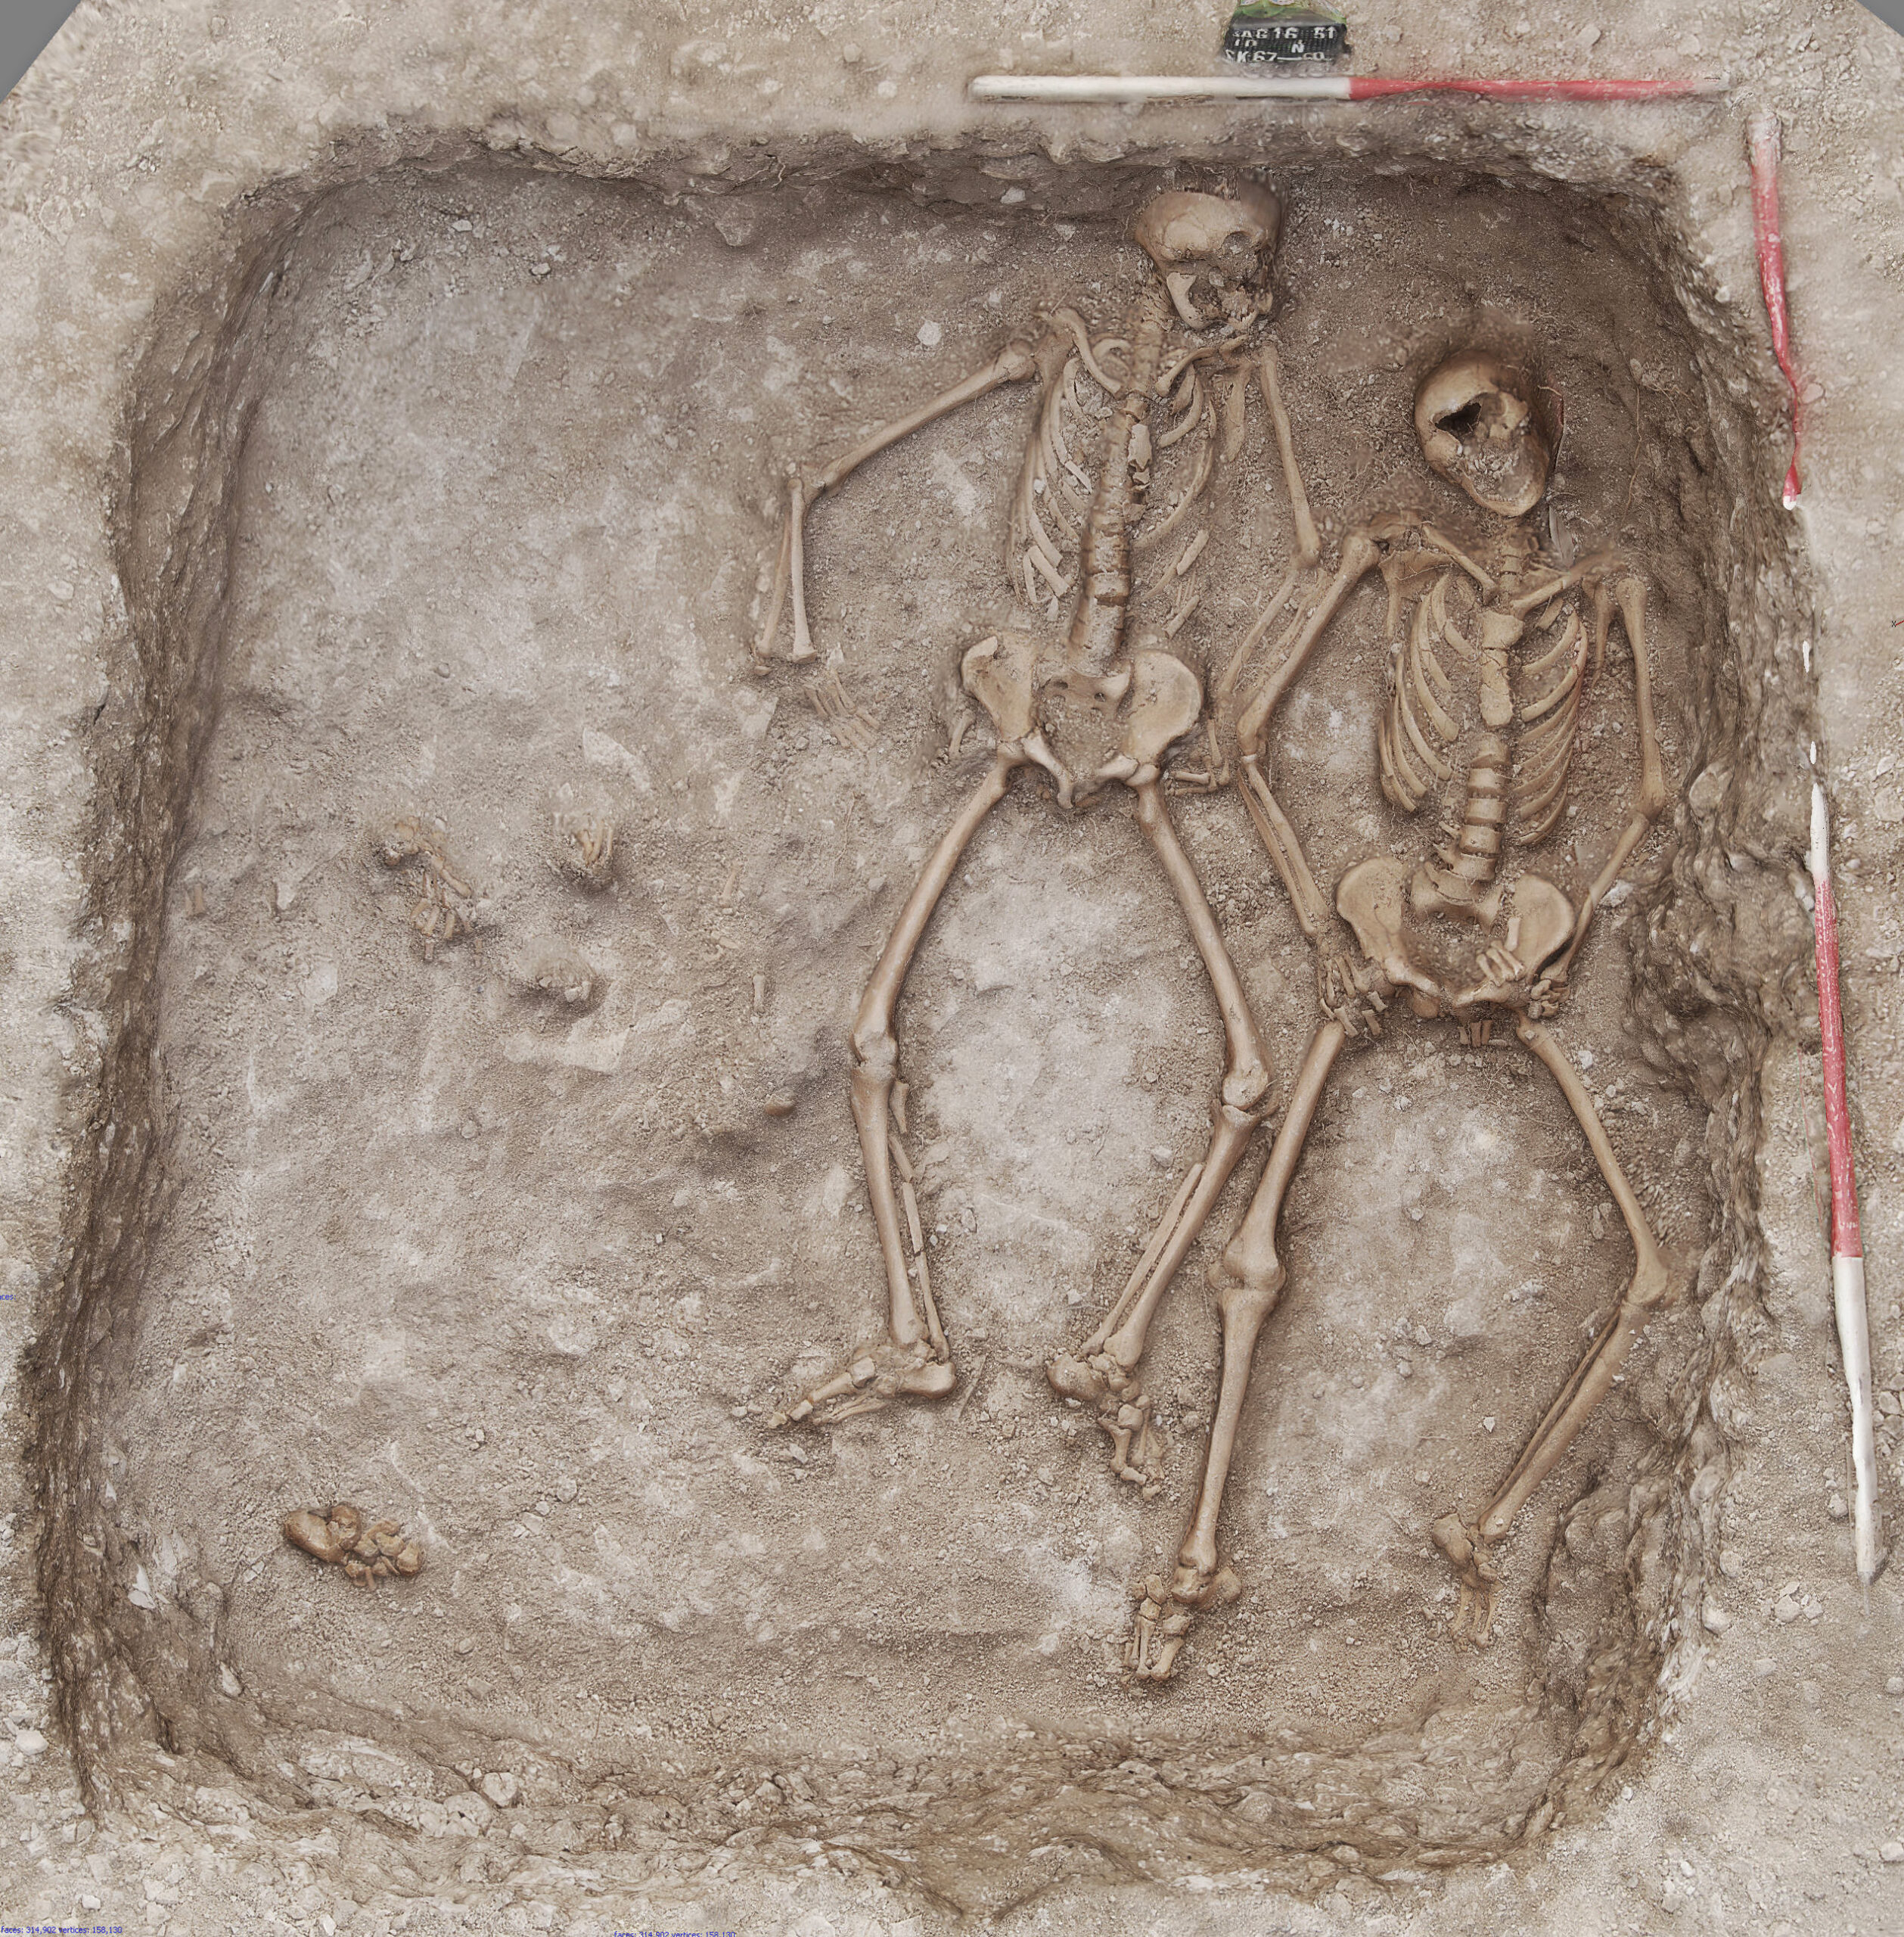 Grave 10 showing 3 human skeletons